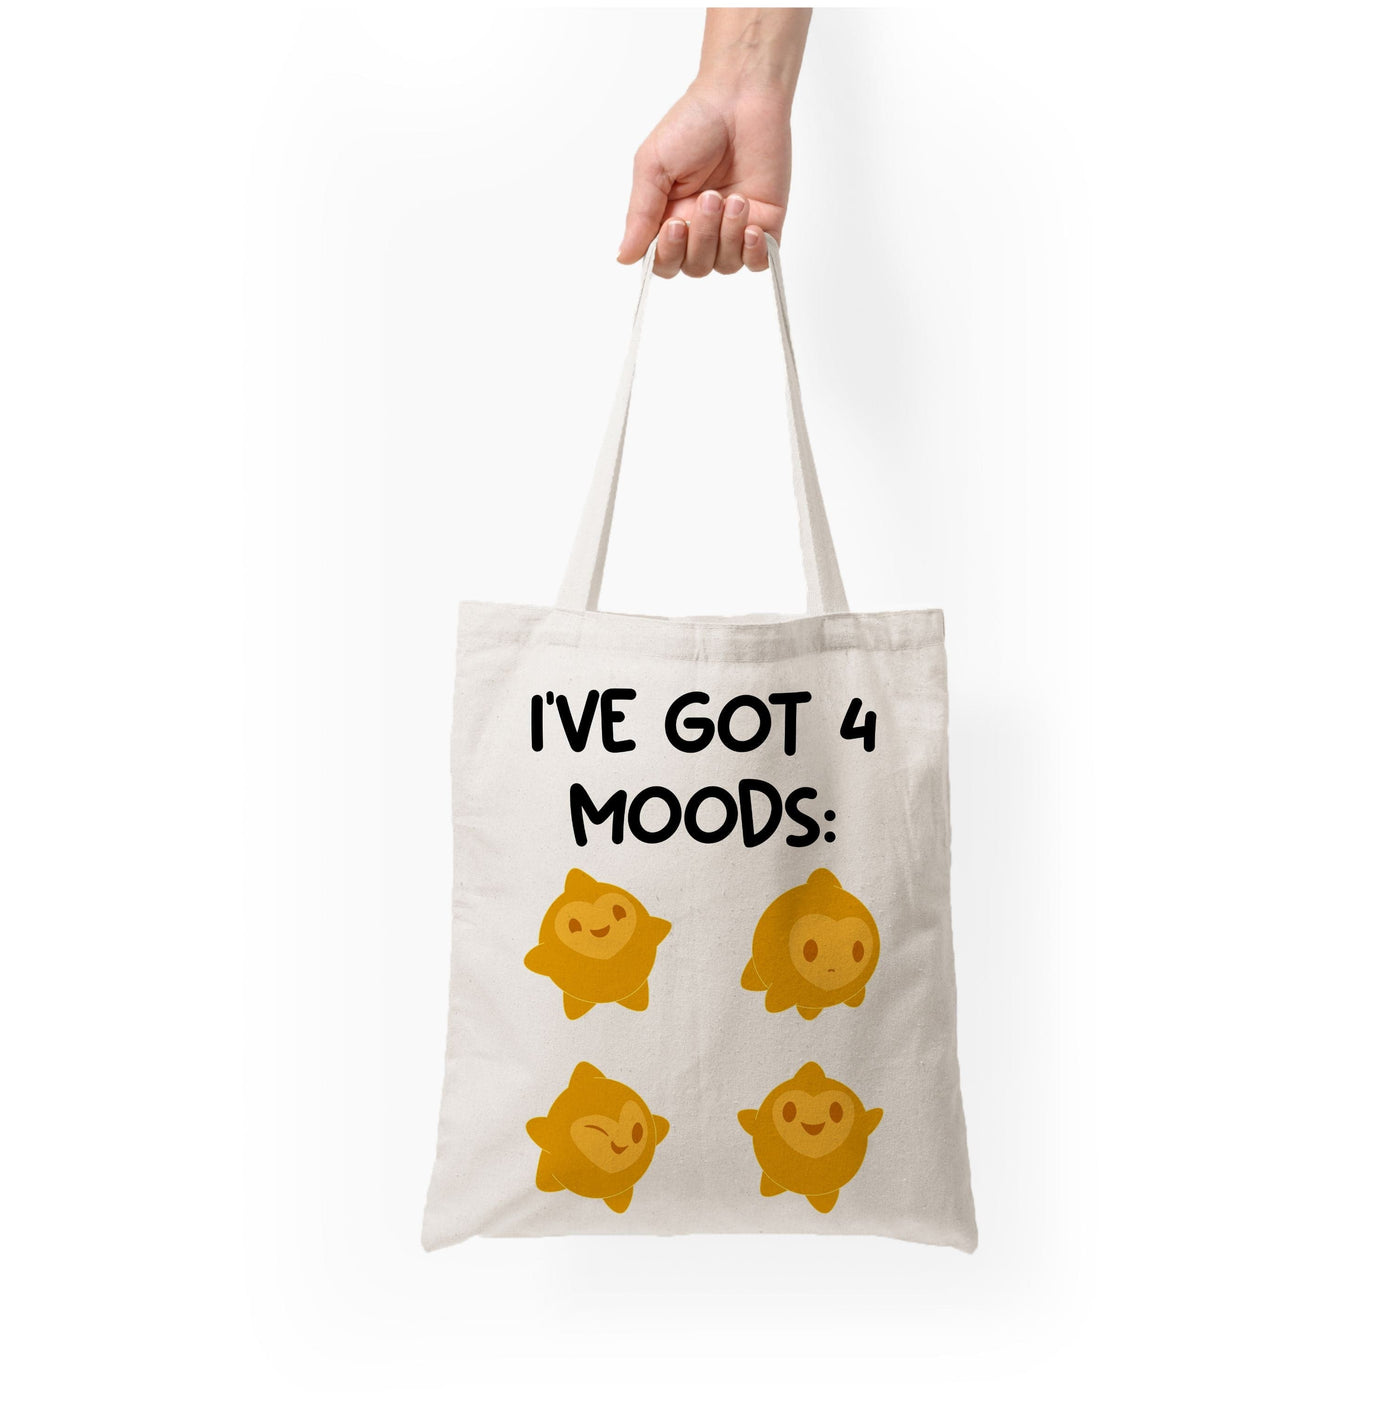 4 Moods - Wish Tote Bag